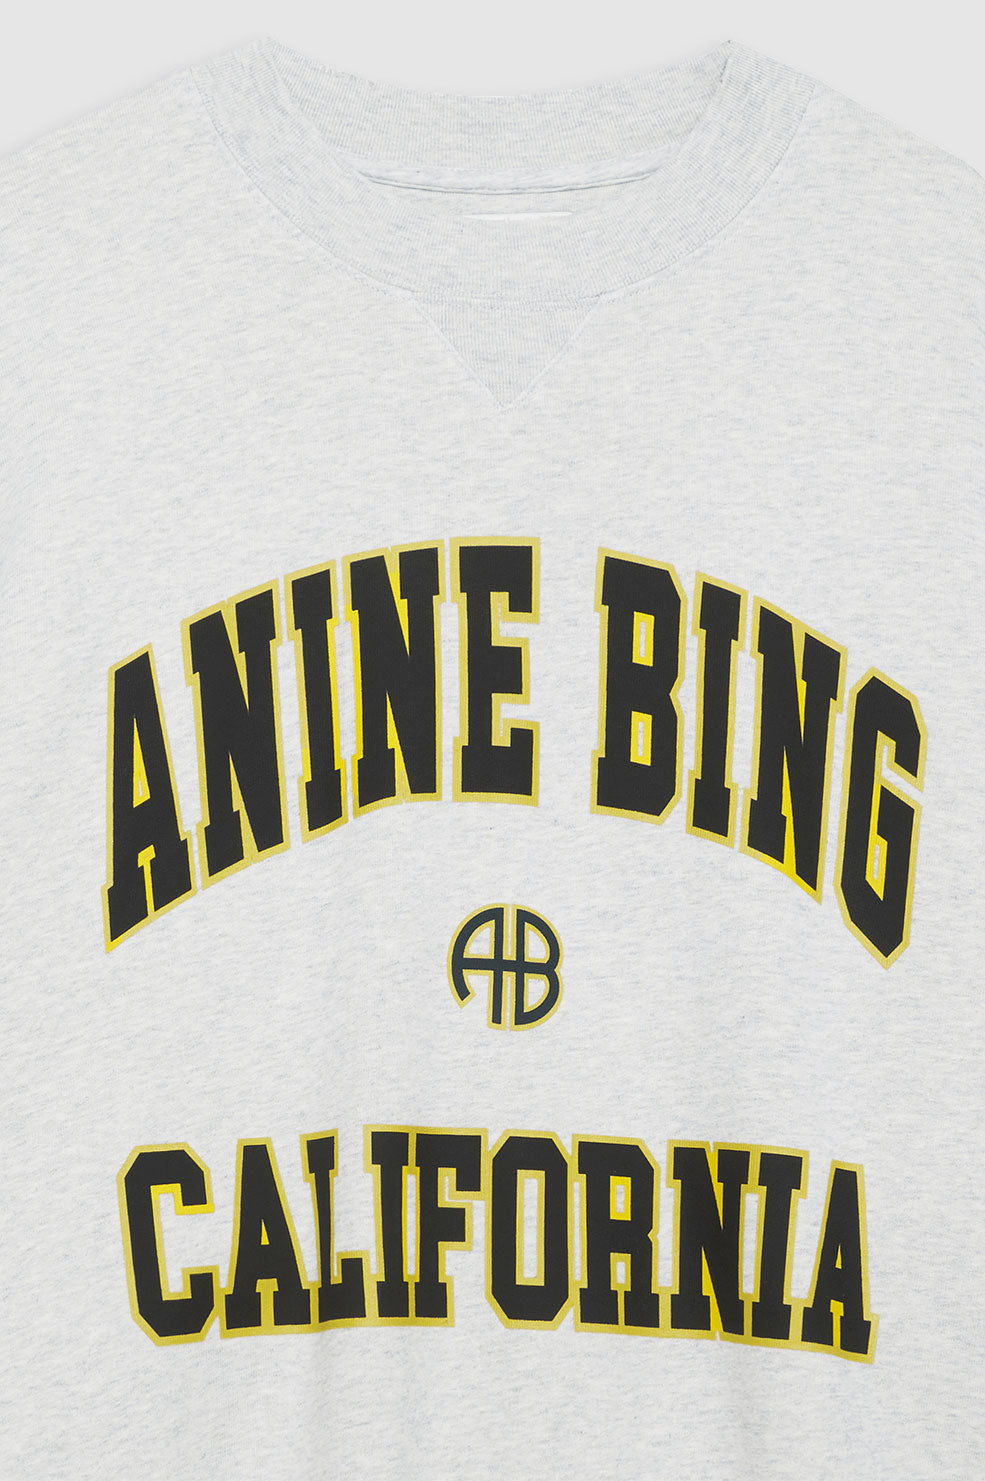 ANINE BING Jaci Sweatshirt Anine Bing California - Heather Grey - Close Up View